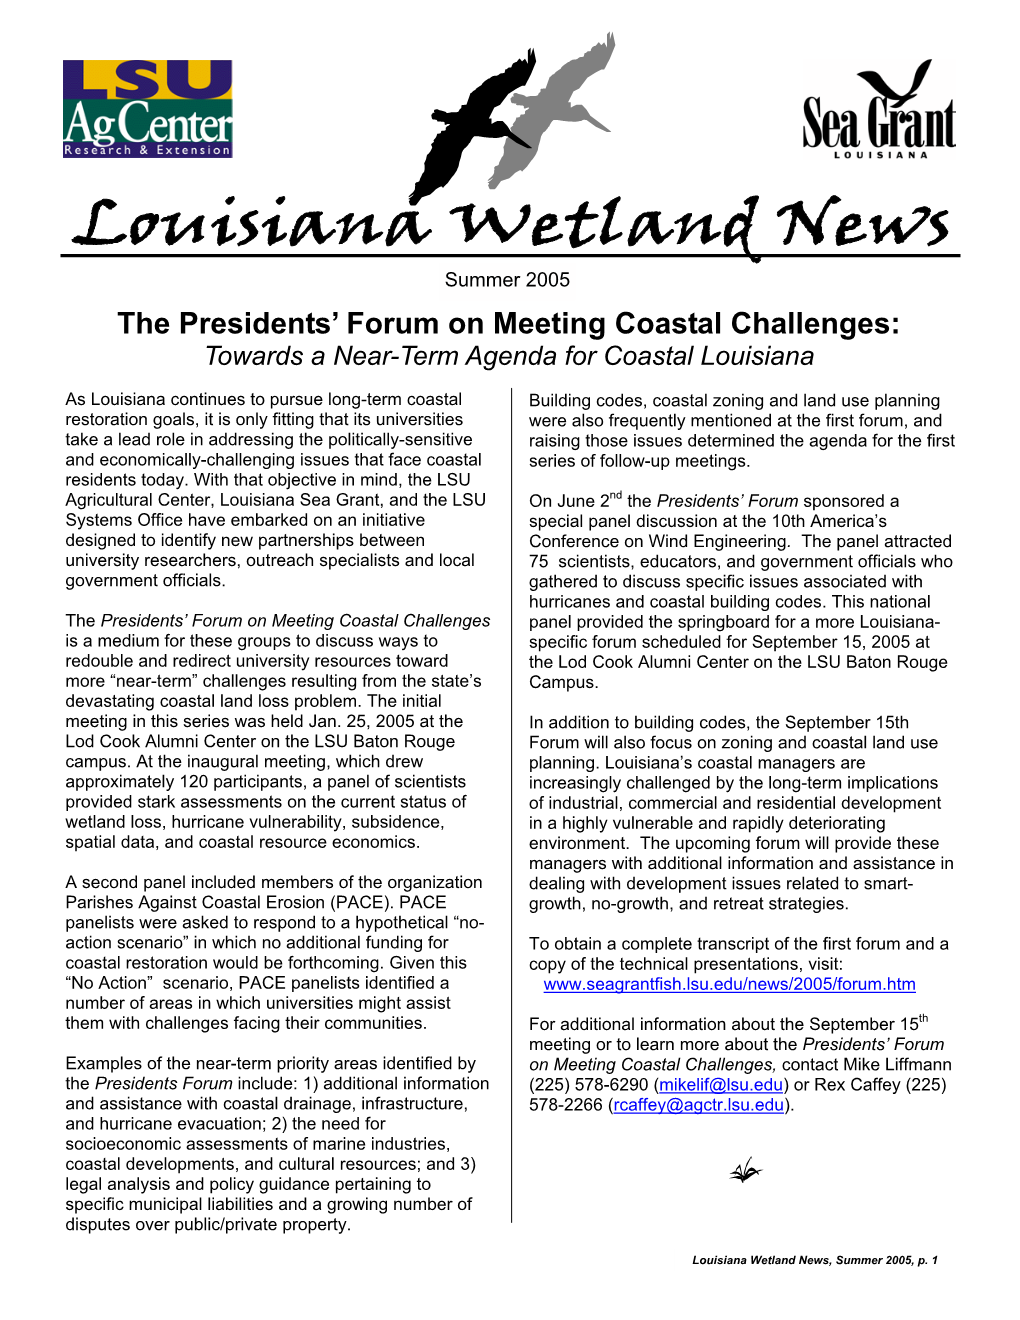 Summer 2005 the Presidents’ Forum on Meeting Coastal Challenges: Towards a Near-Term Agenda for Coastal Louisiana